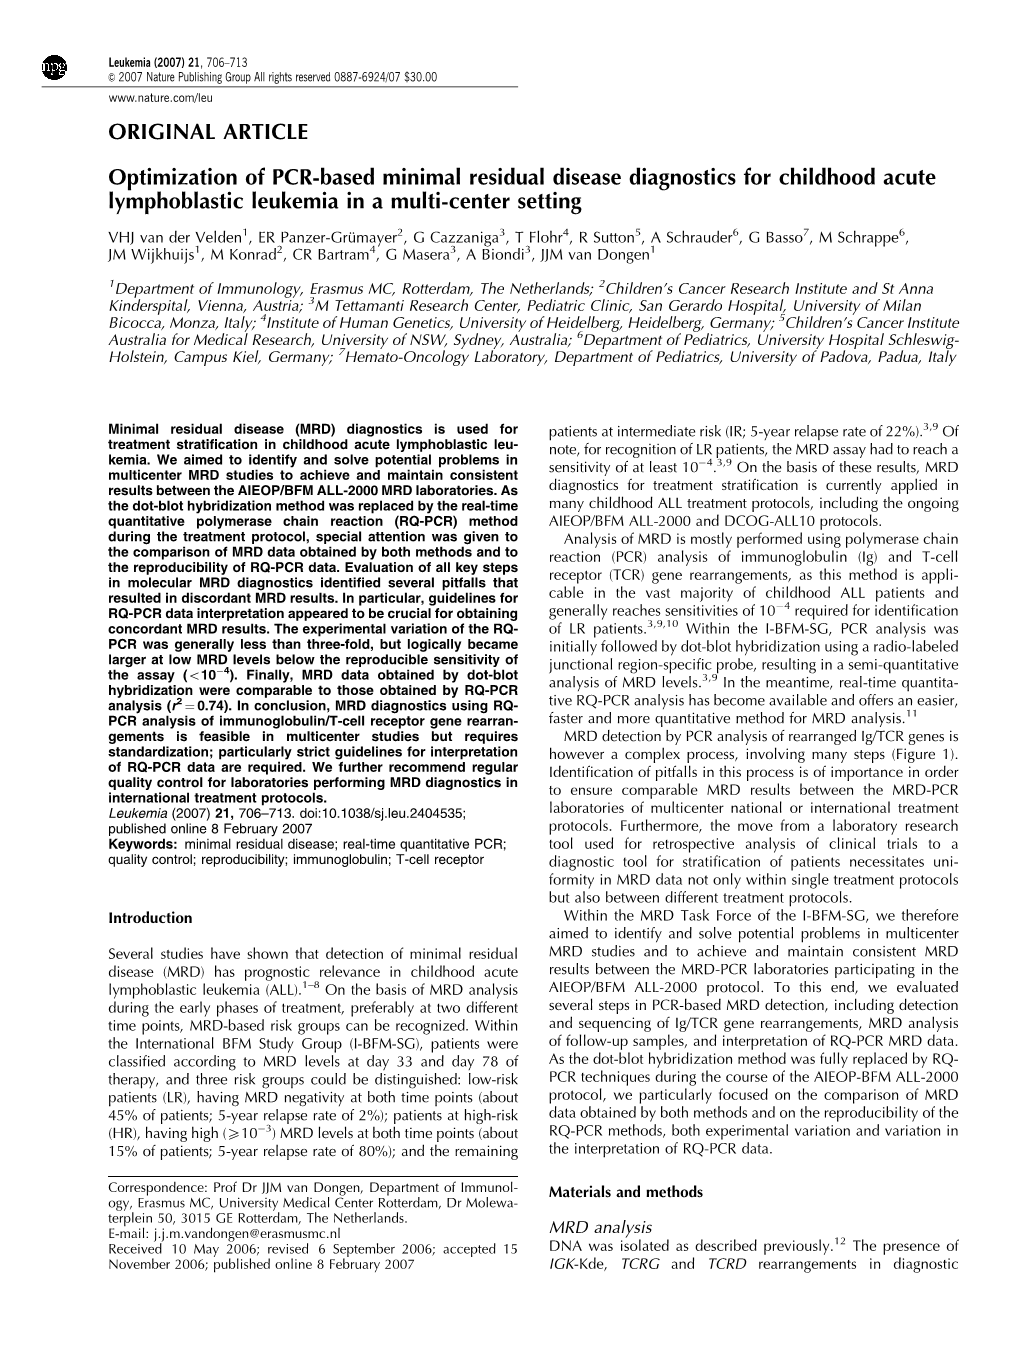 ORIGINAL ARTICLE Optimization of PCR-Based Minimal Residual Disease Diagnostics for Childhood Acute Lymphoblastic Leukemia in A